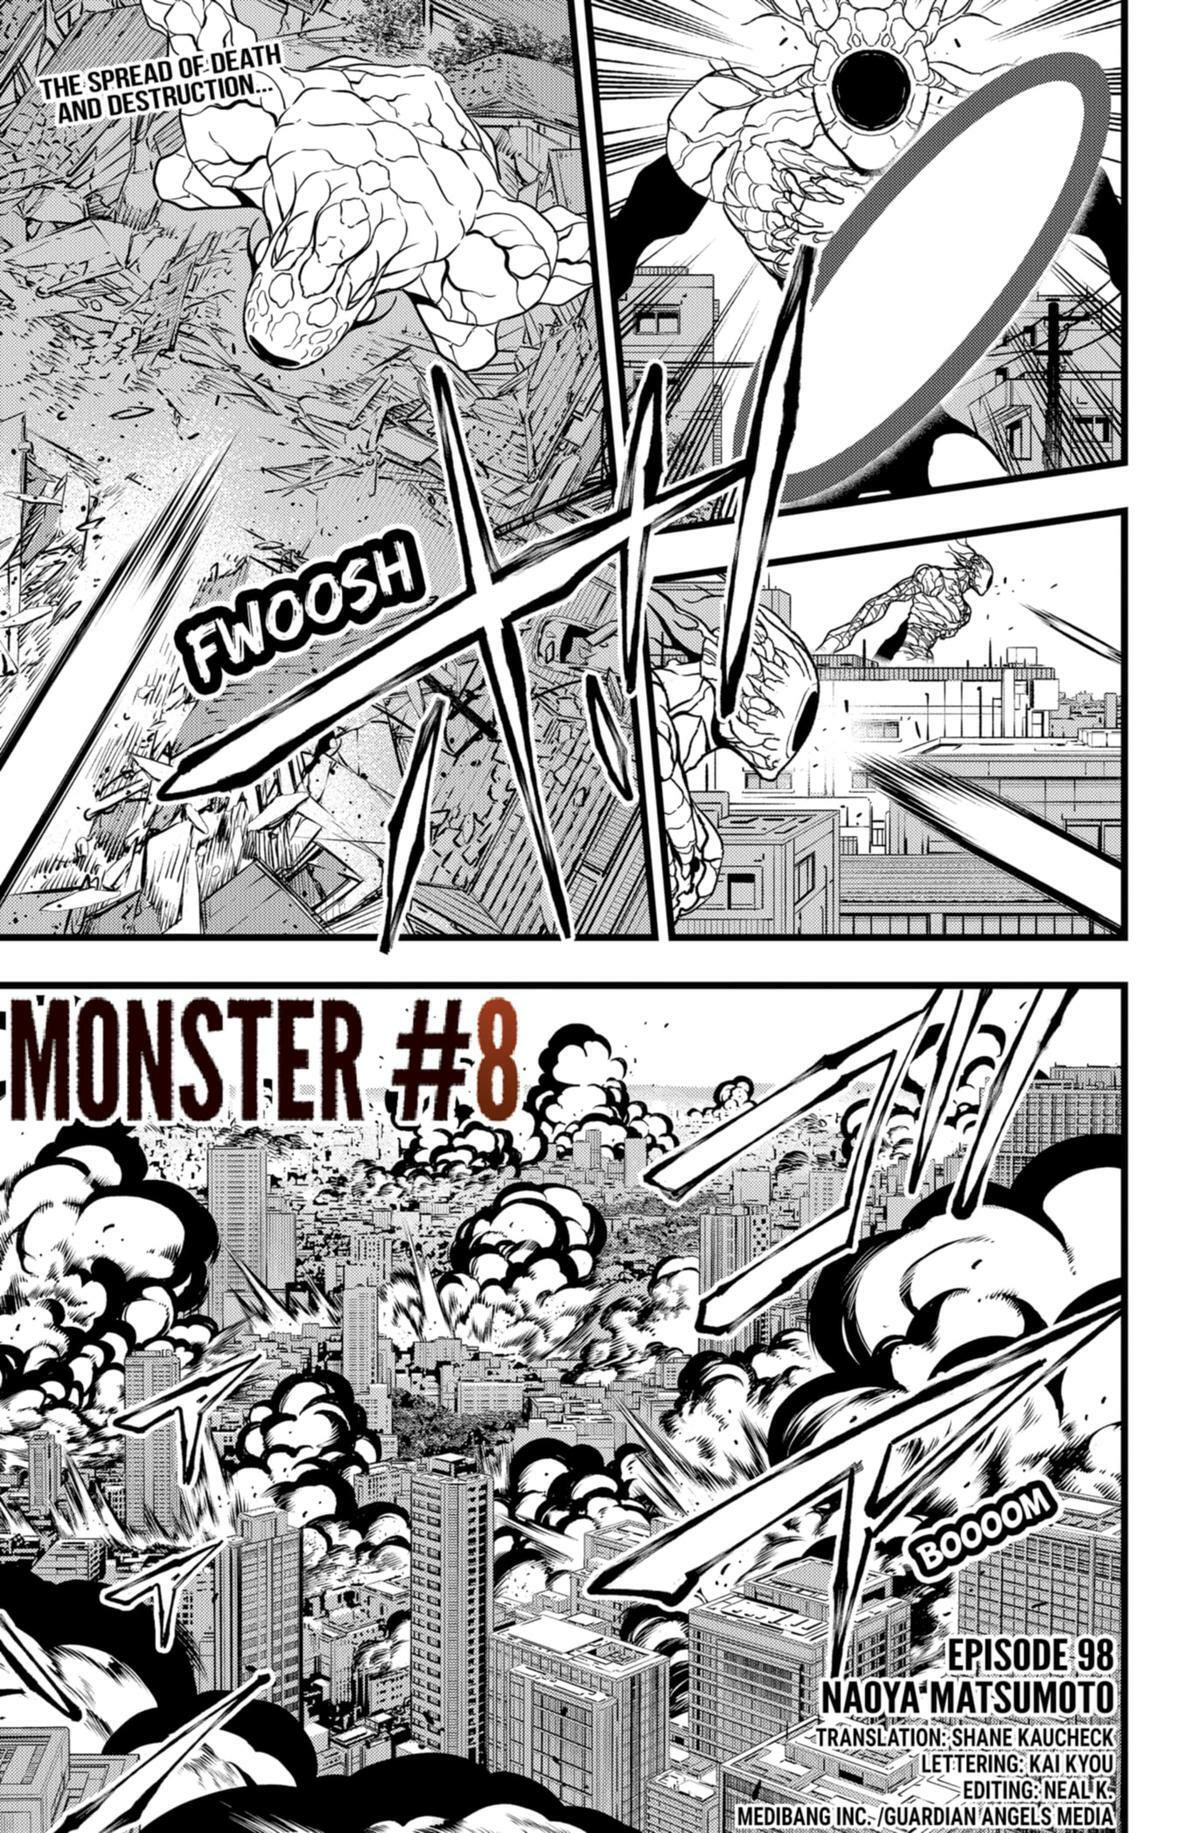 Kaiju No. 8 Chapter 98 page 1 - Mangakakalot